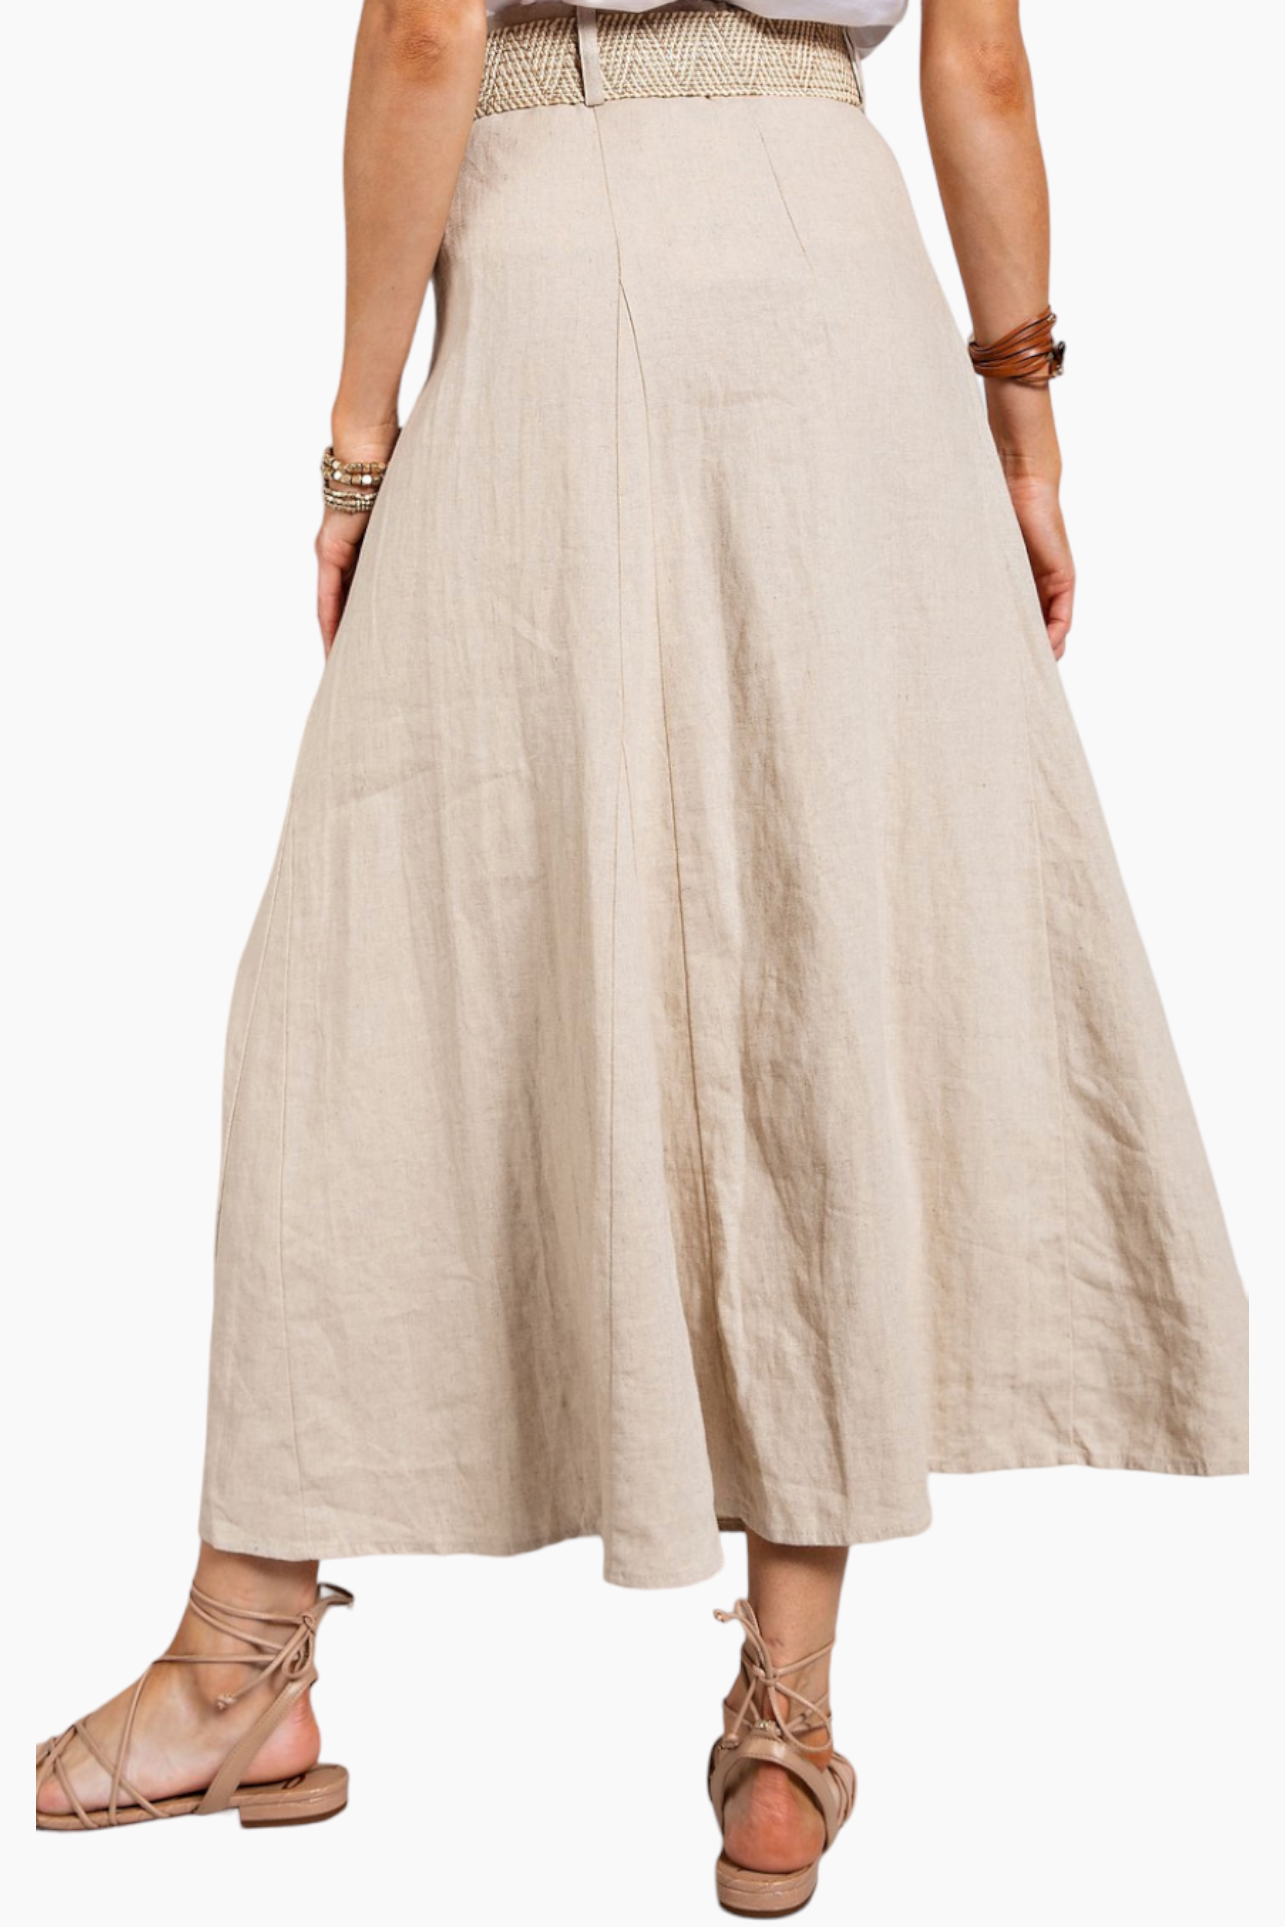 Miranda Linen Flowy Maxi Skirt